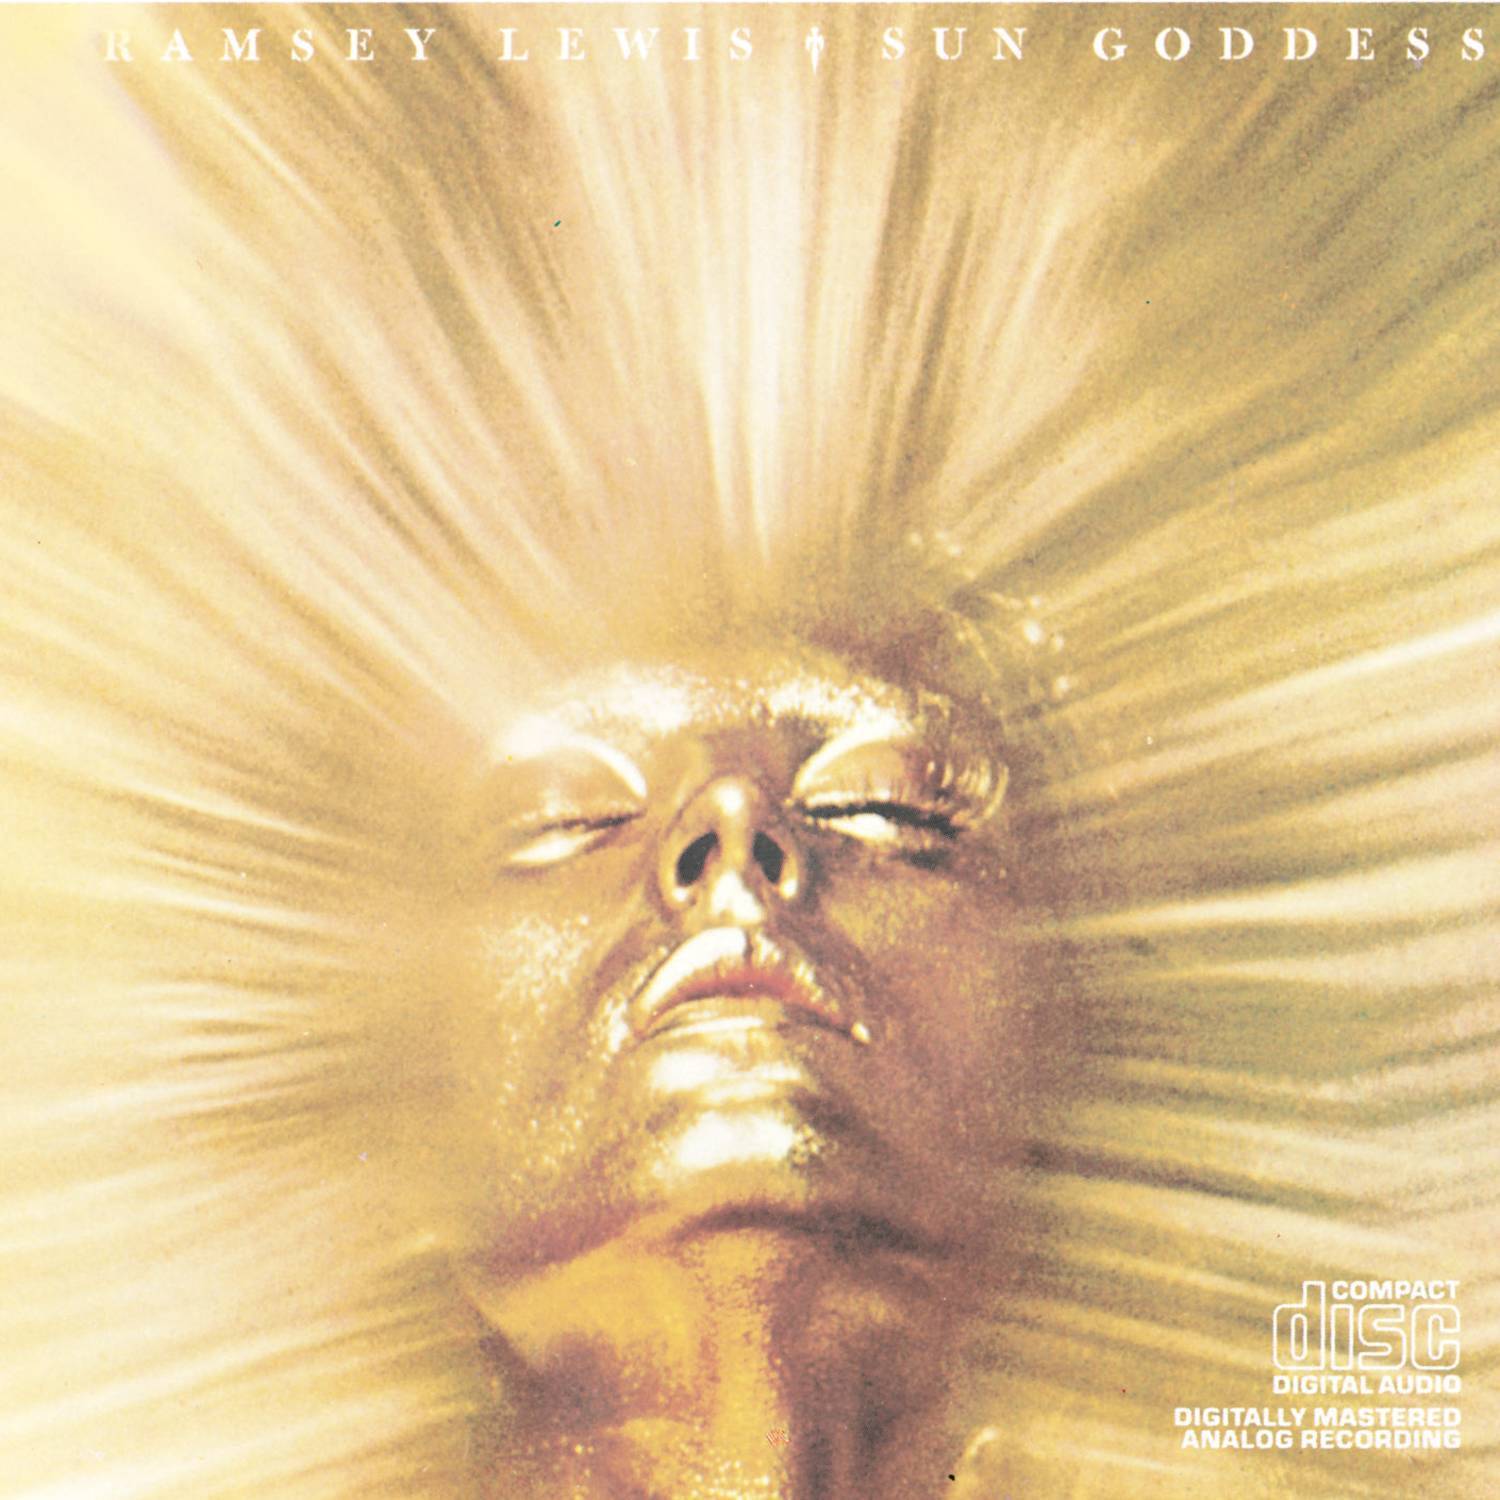 Ramsey Lewis - Sun Goddess (1974/2017) [AcousticSounds FLAC 24bit/192kHz]